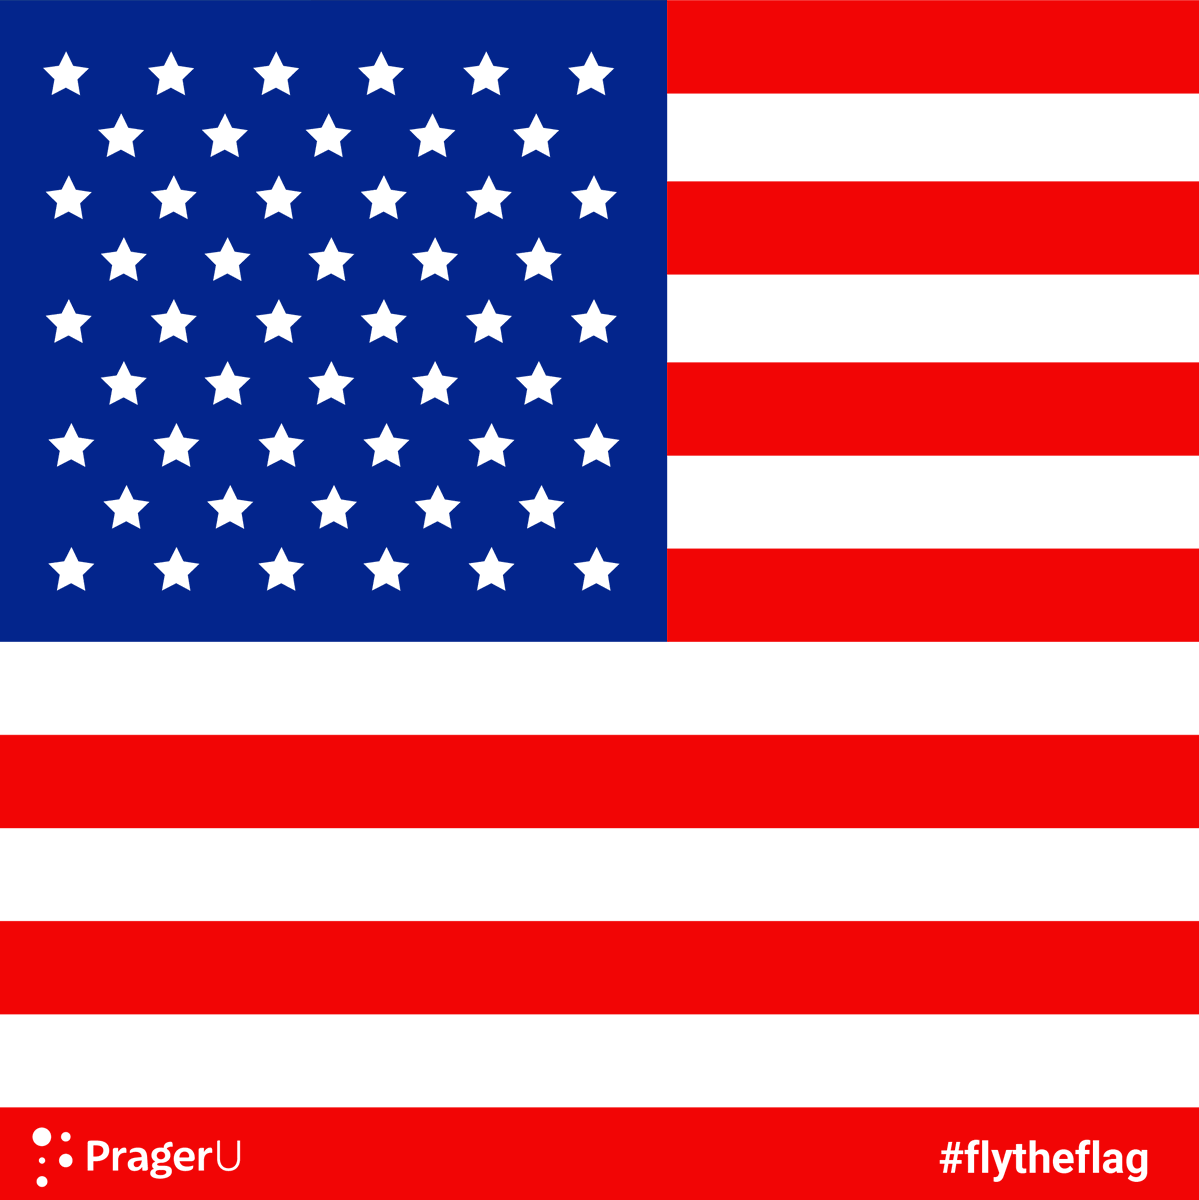 #FlytheFlag #CelebrateAmerica #ProudAmerican @prageru